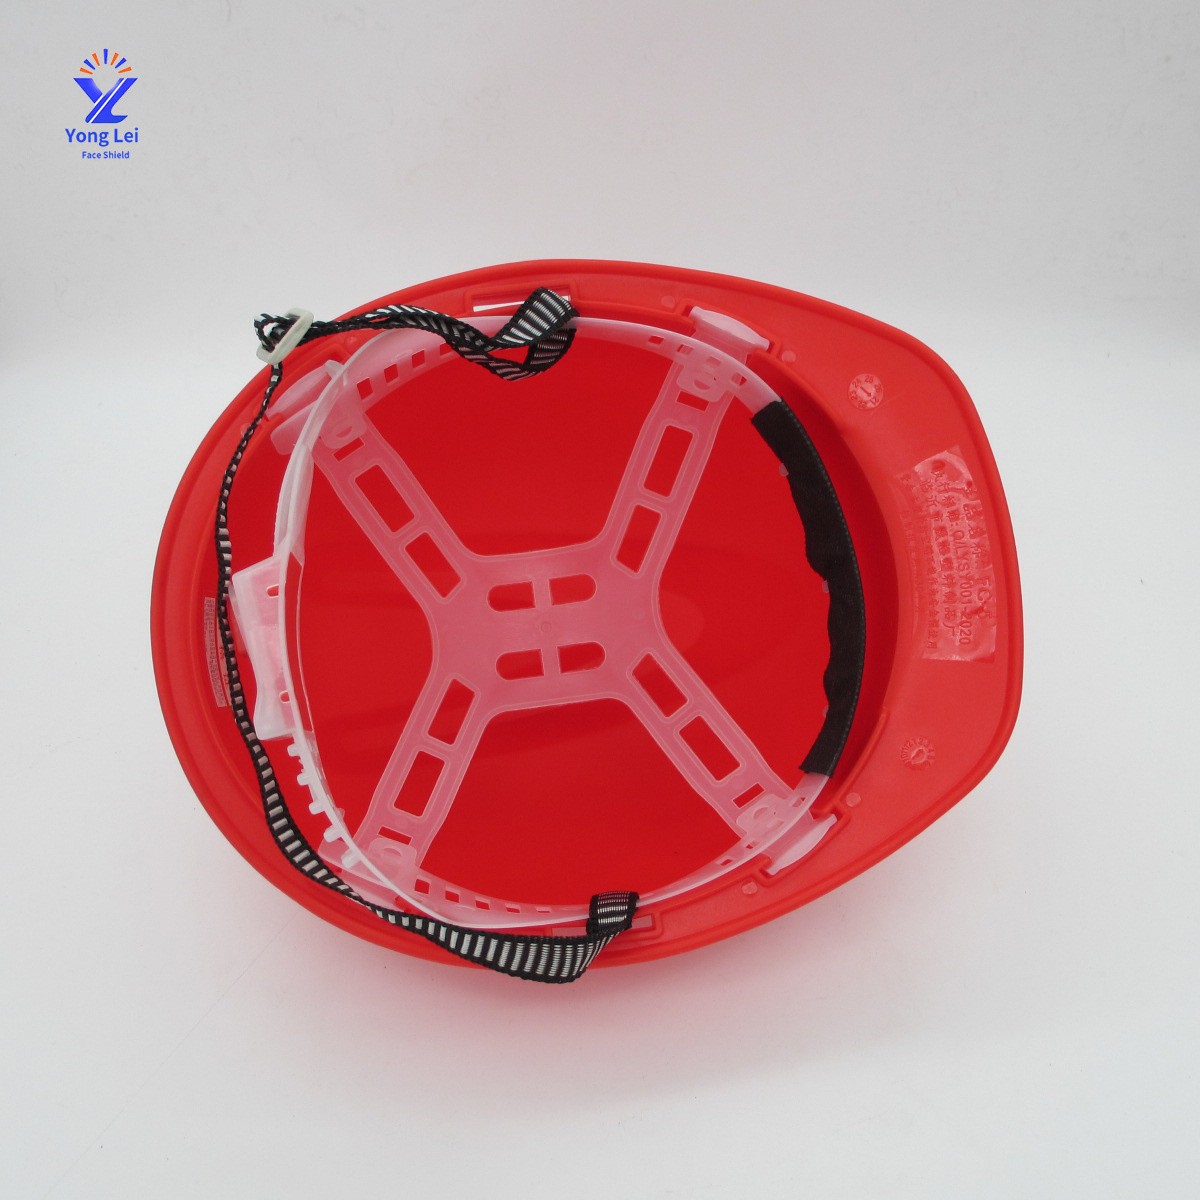 High Impact Resistant Safety Helmet